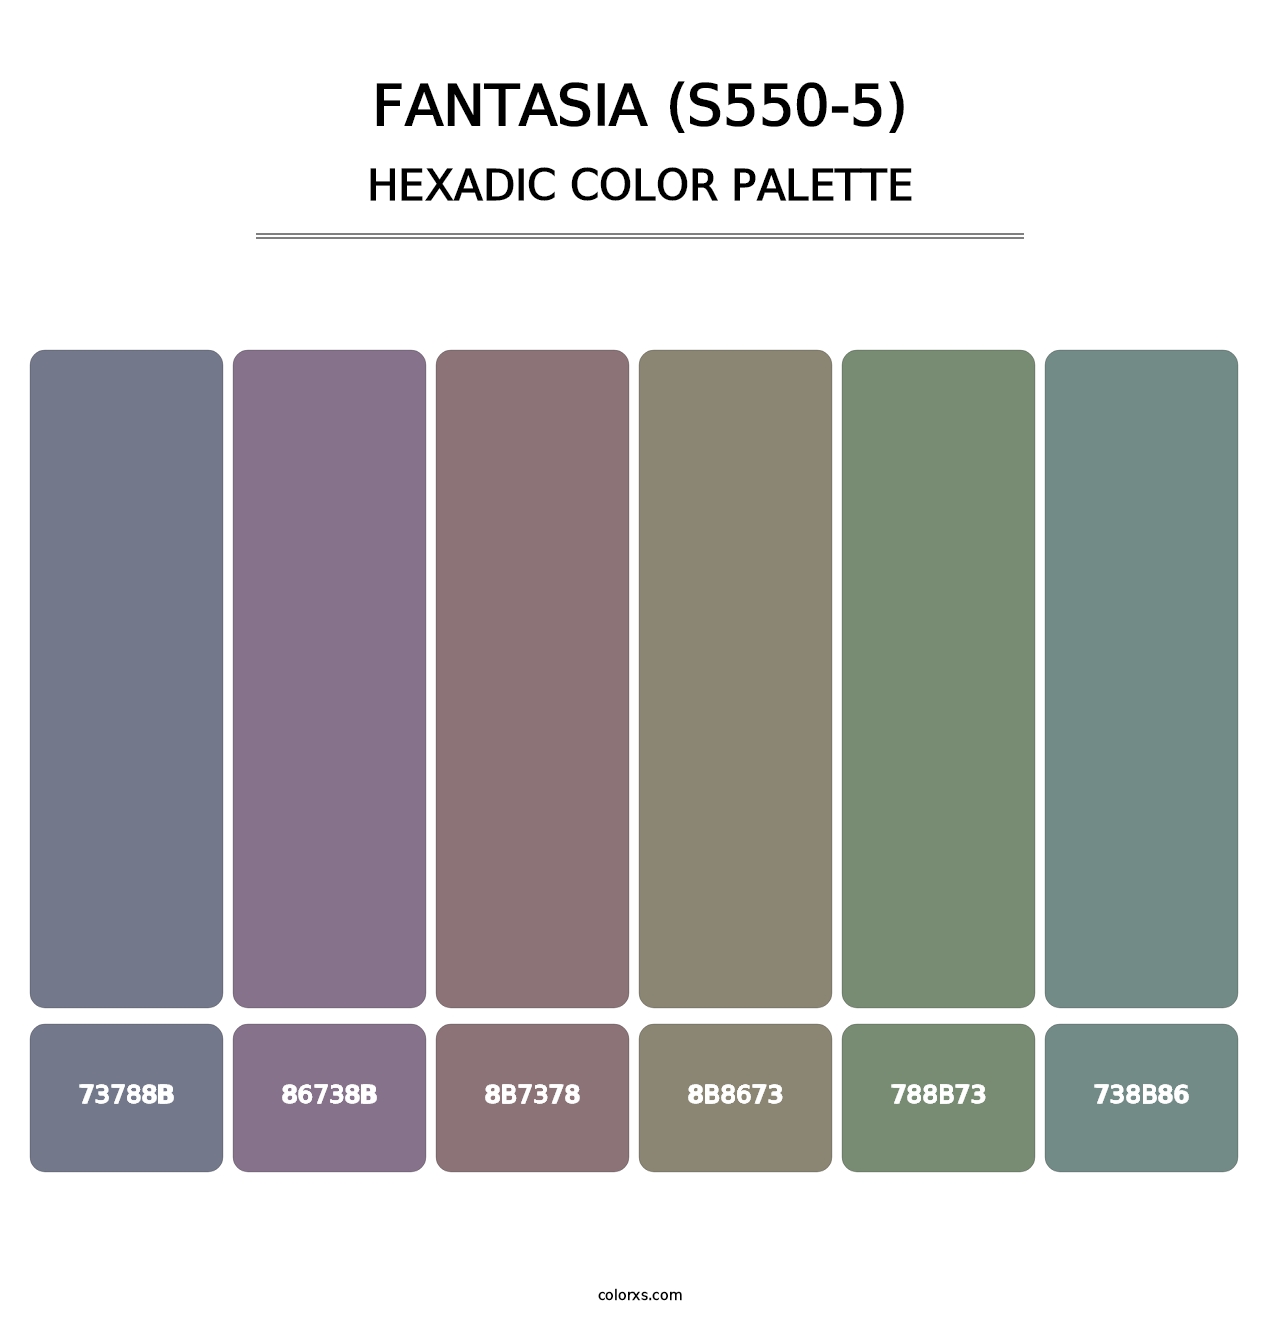 Fantasia (S550-5) - Hexadic Color Palette